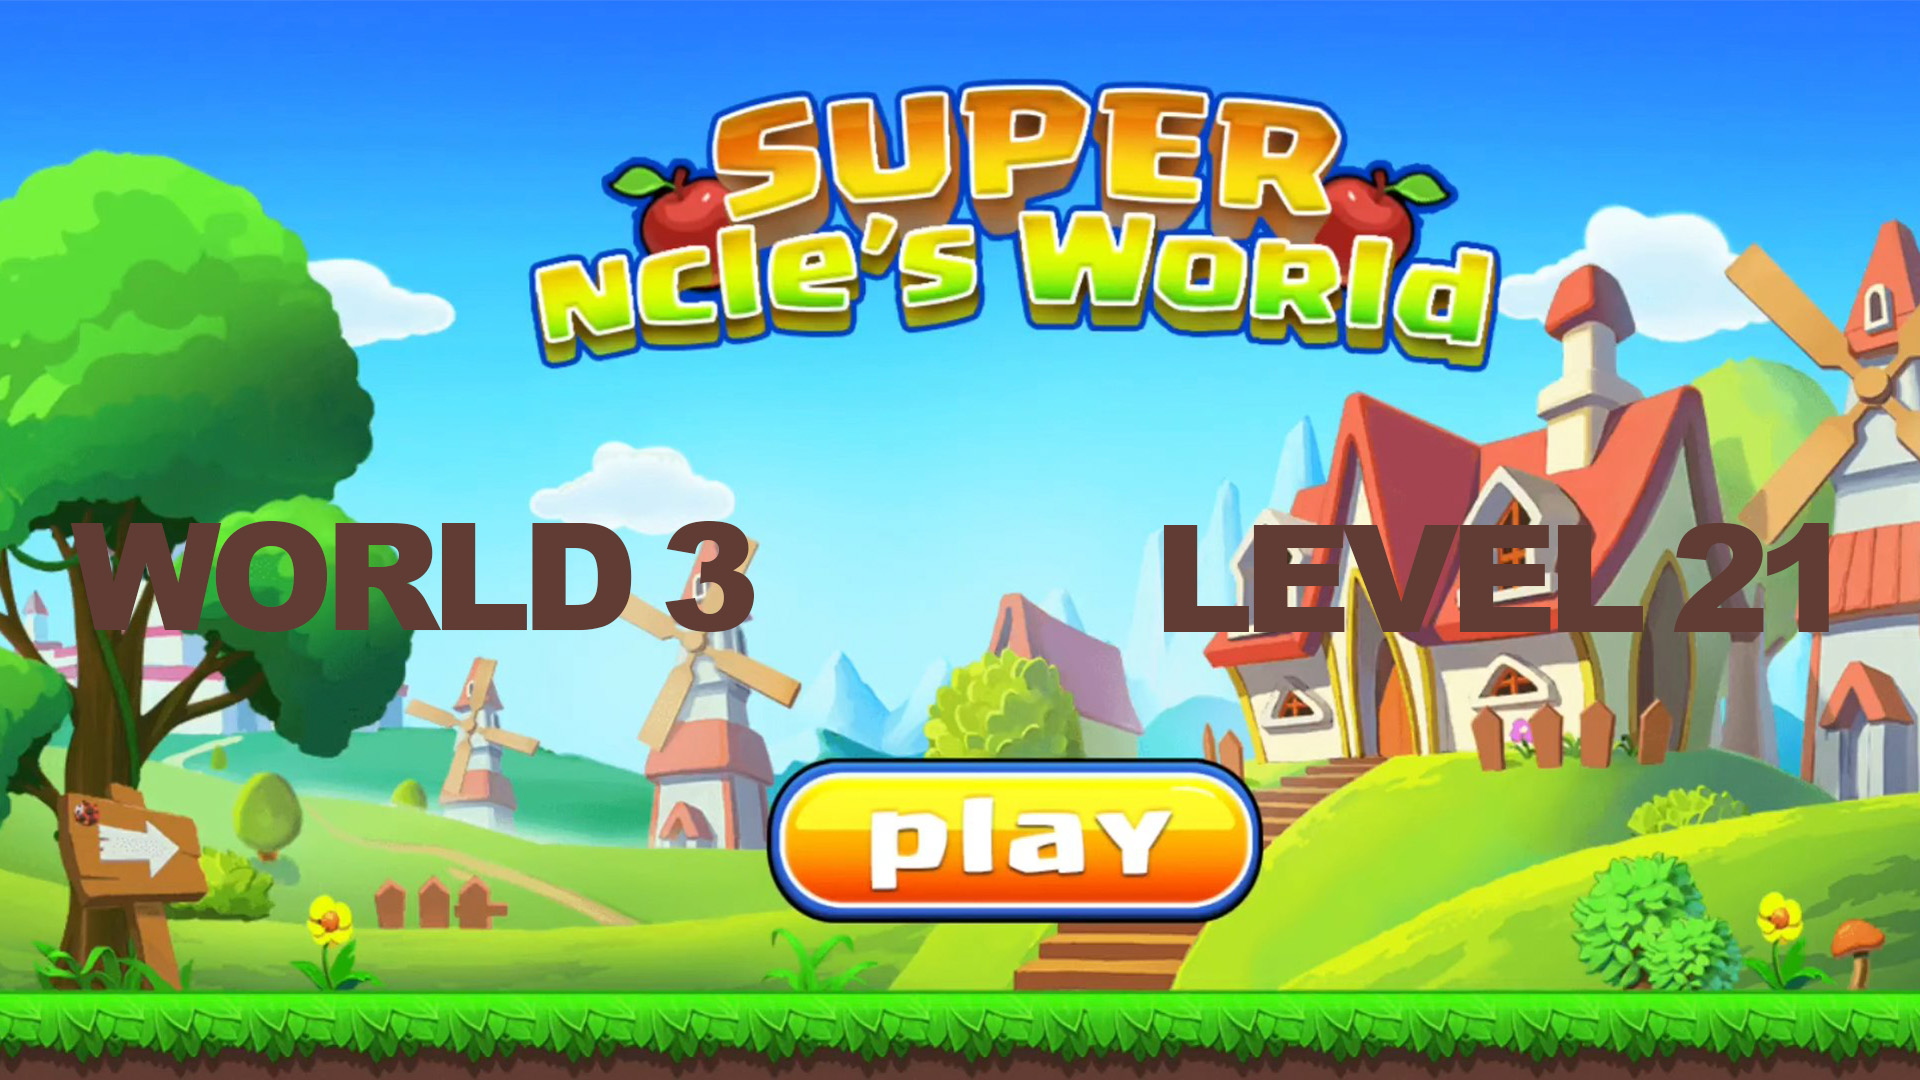 Super ncle's  World 3. Level 21.